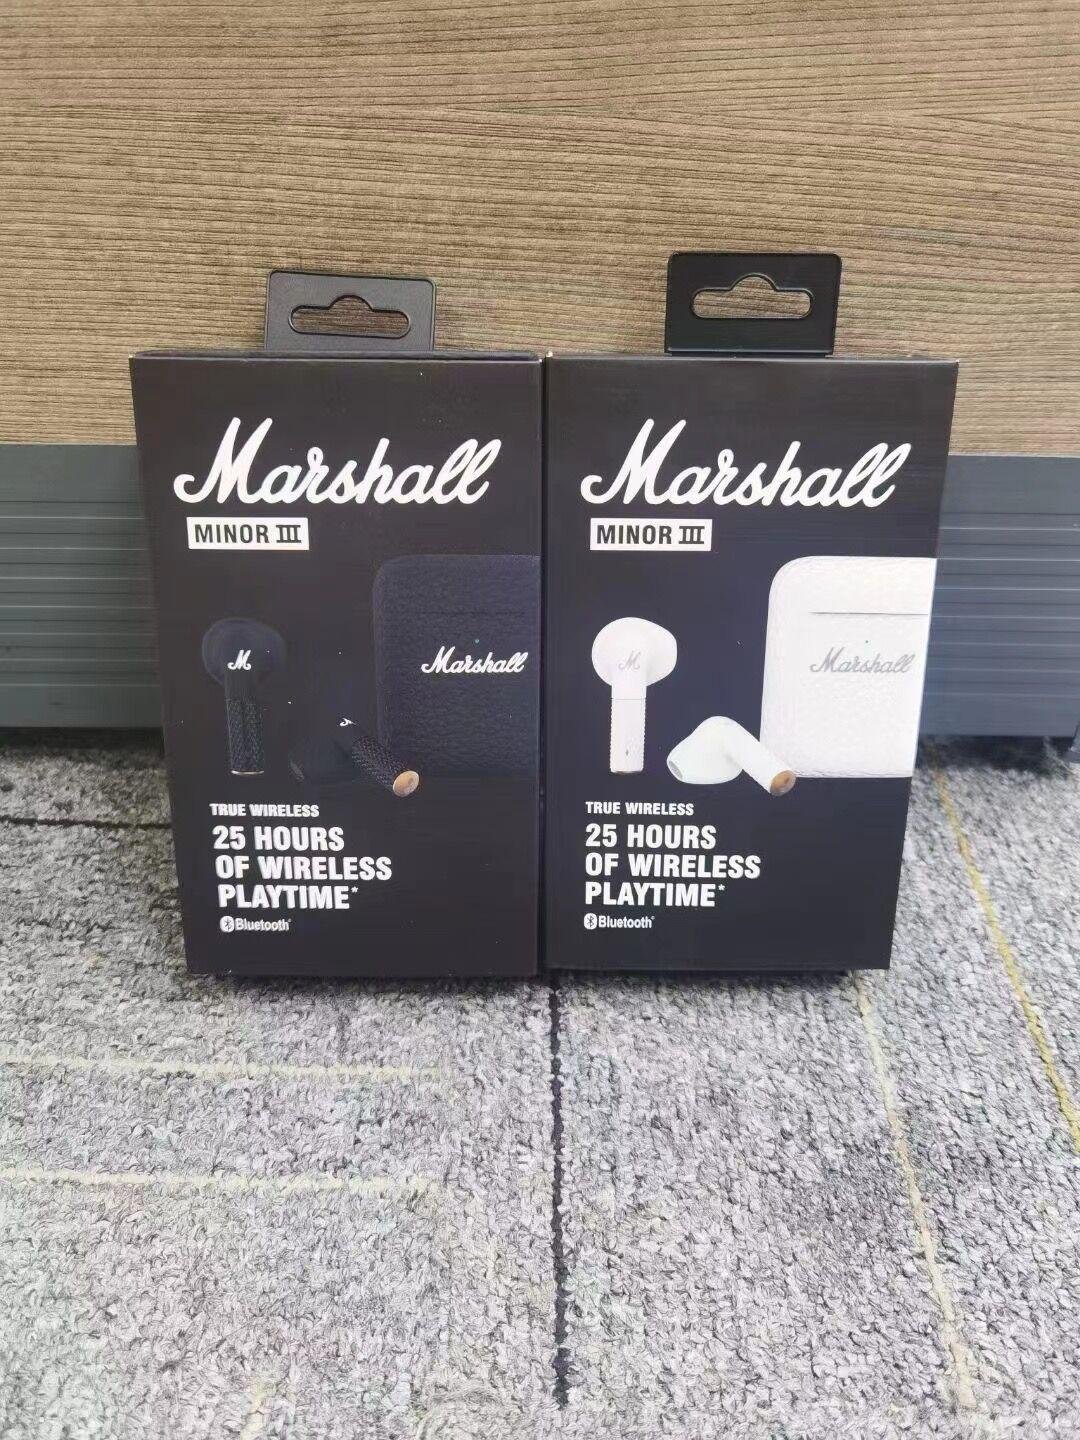 Marshall MINOR III Wireless earbuds discount price 3